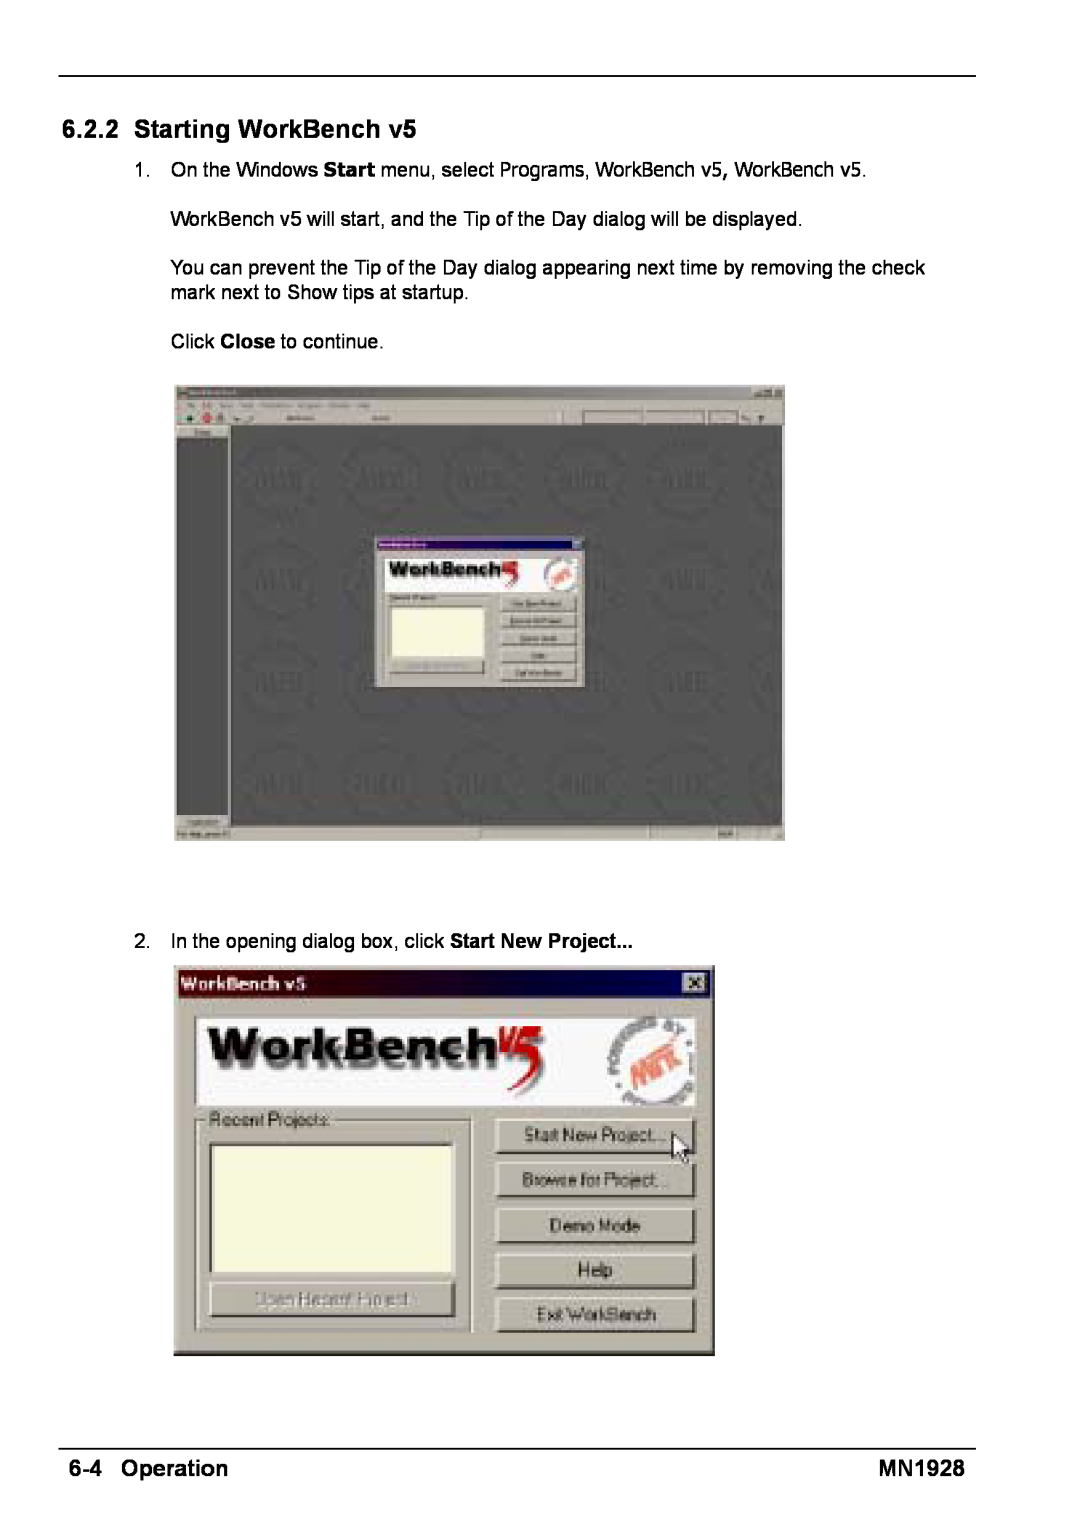 Baldor MN1928 installation manual 6.2.2Starting WorkBench, 6-4Operation 